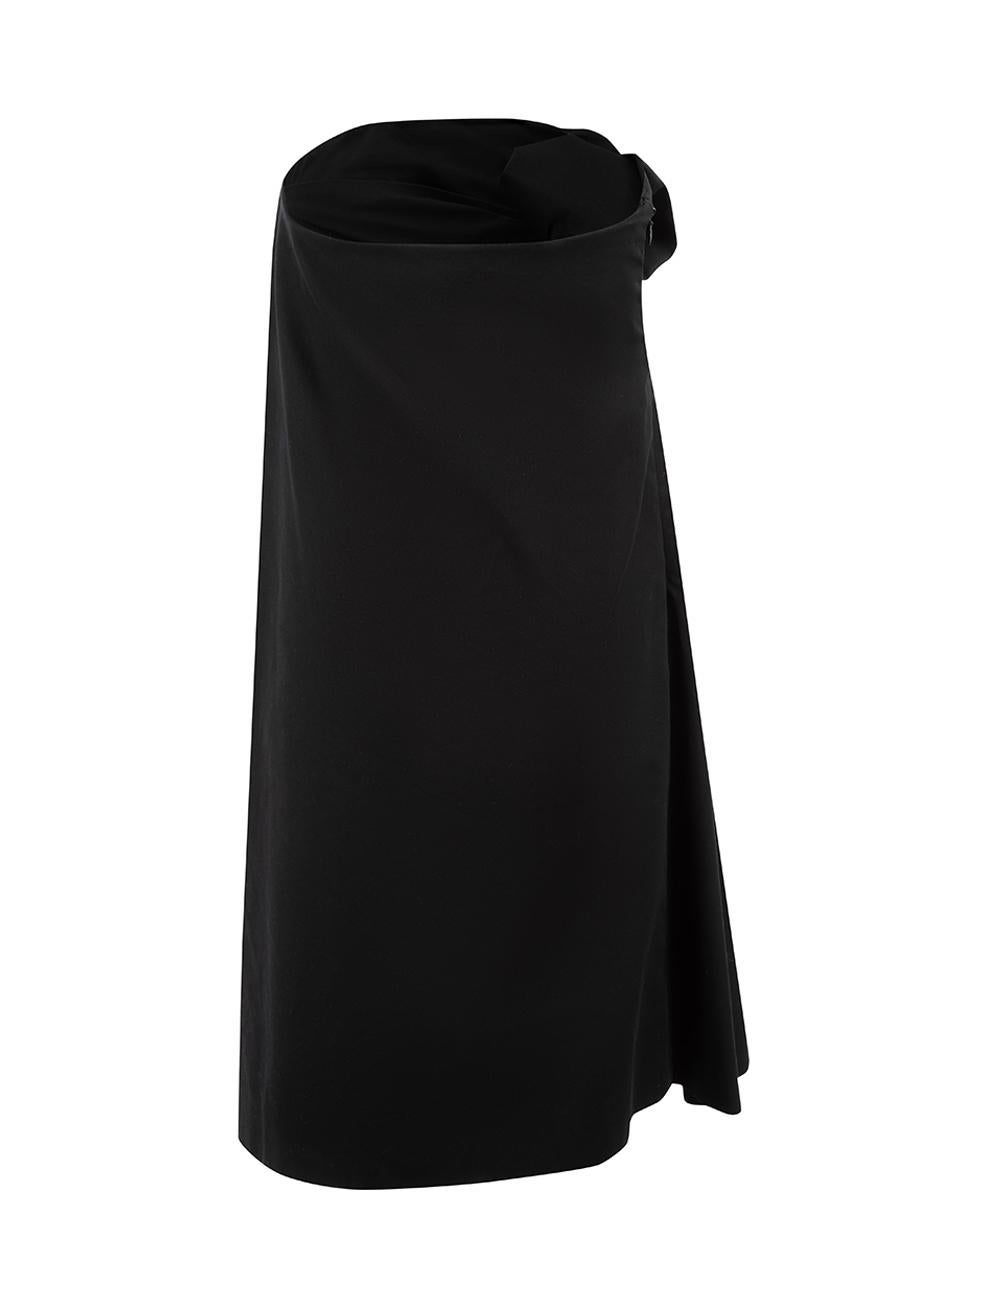 Chloé Women's Black Strapless Evening Mini Dress In Good Condition In London, GB